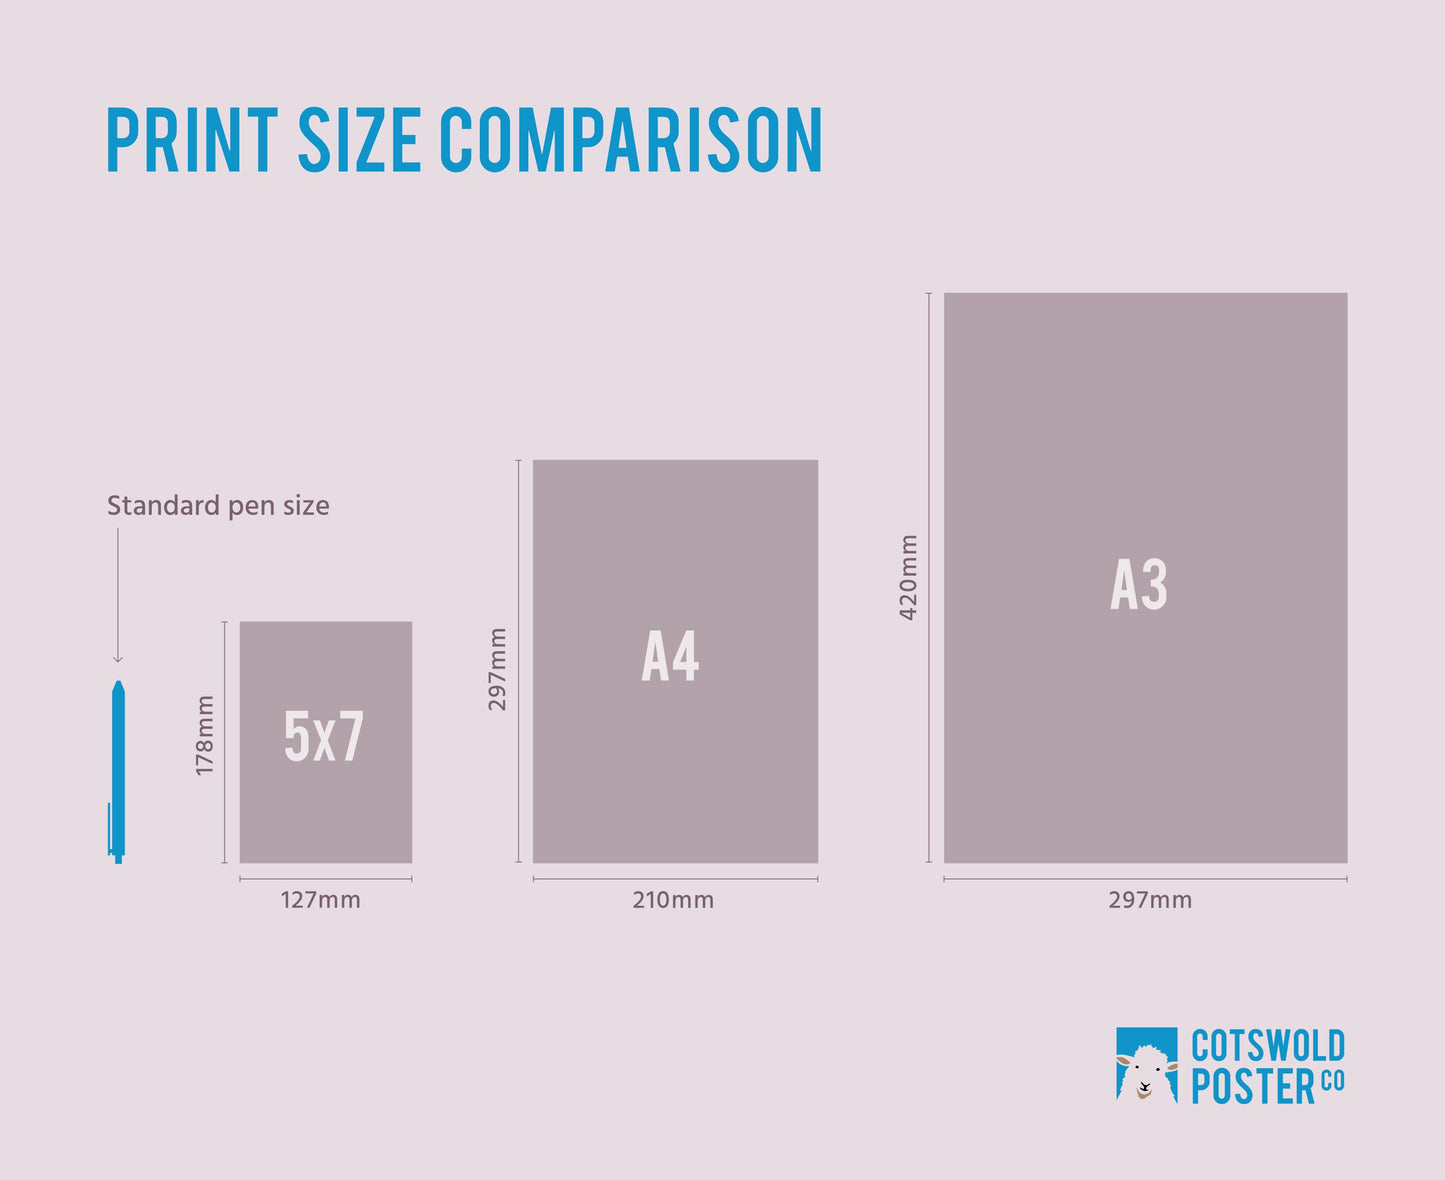 Scale of art print sizes